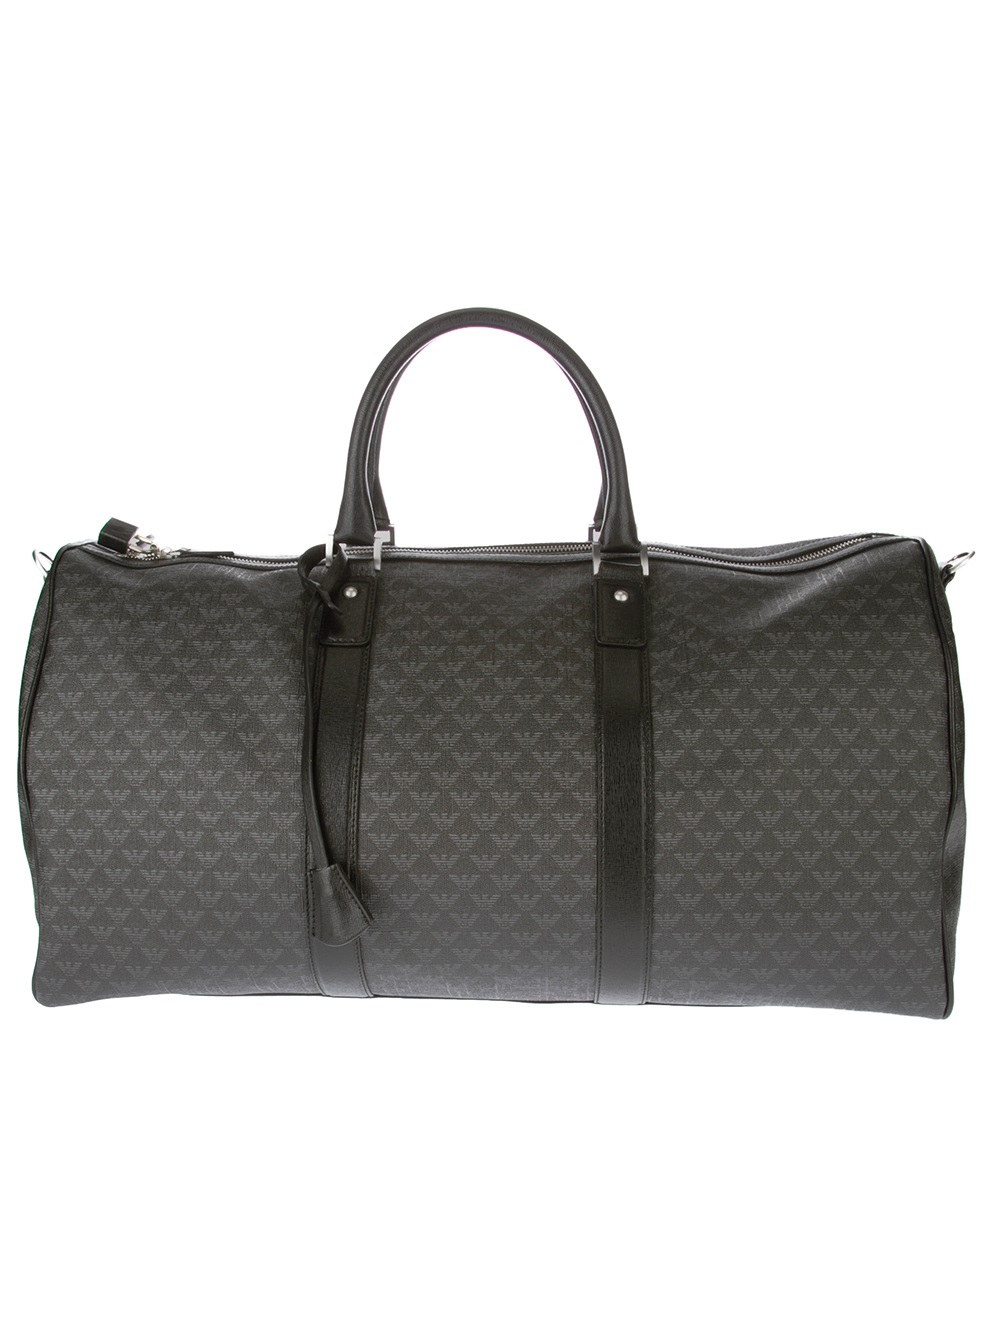 Emporio Armani Monogrammed Duffle Bag in Black for Men